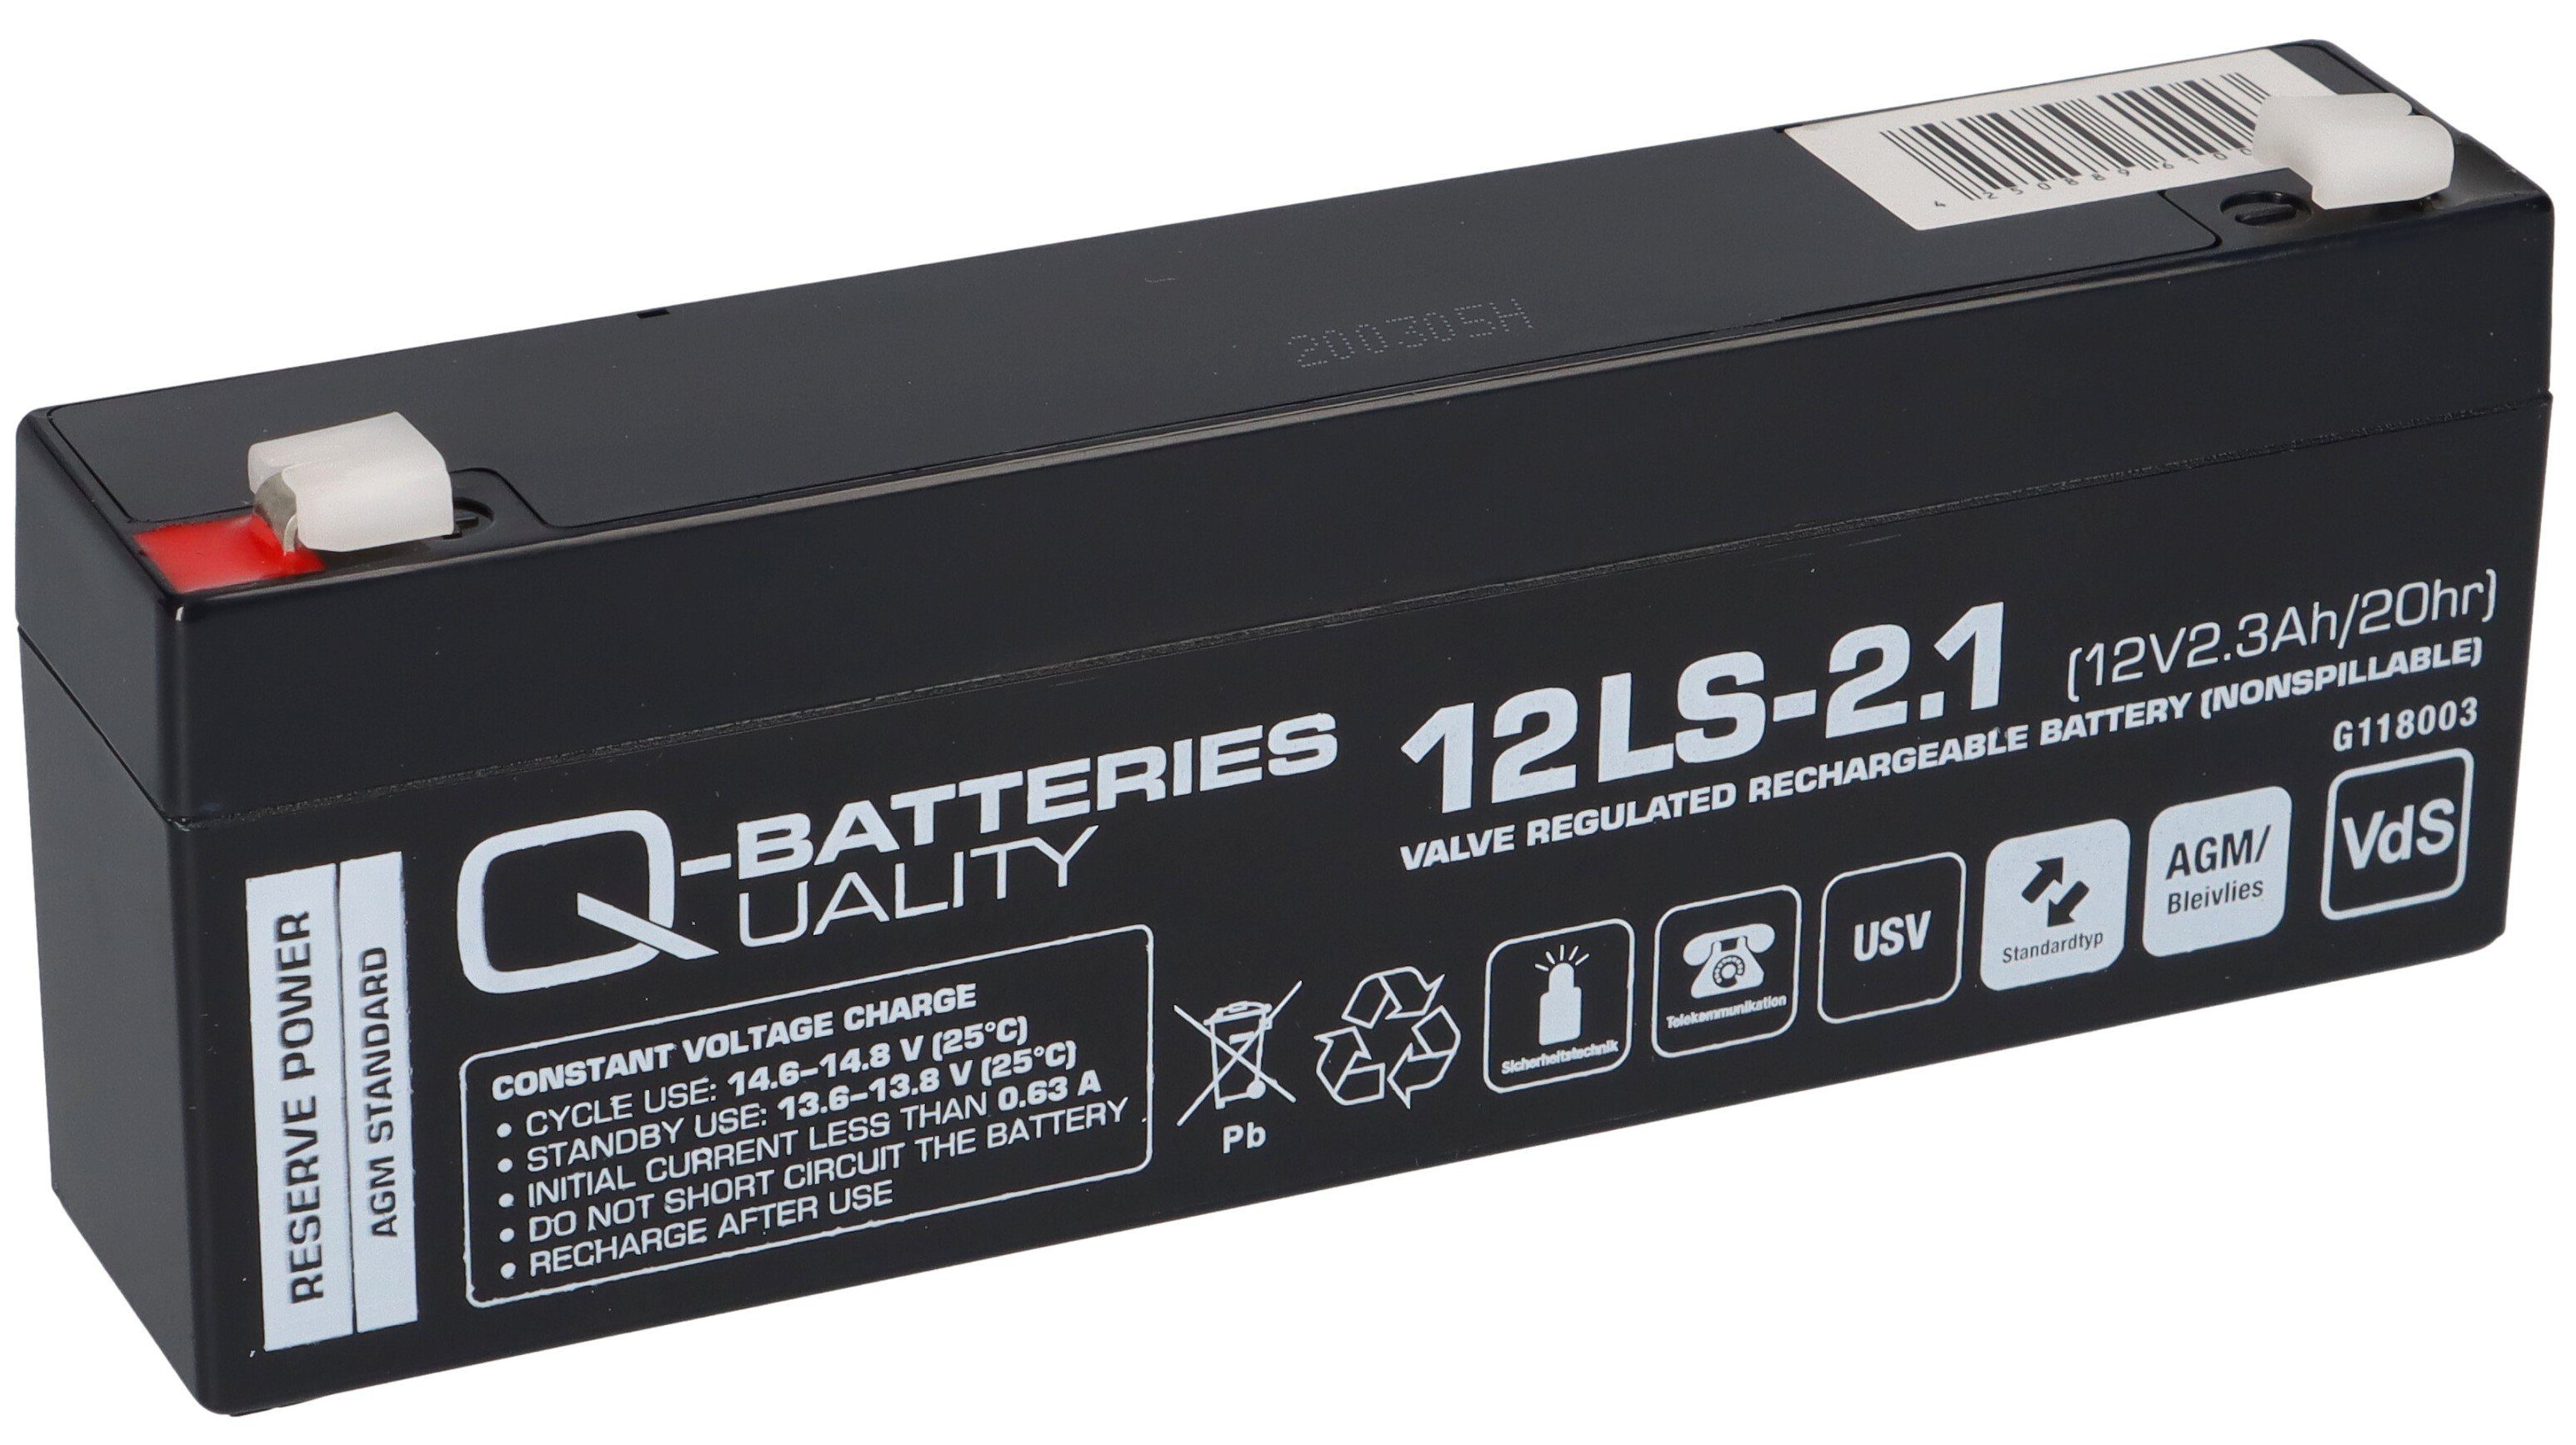 Sonderpreis-Highlights Q-Batteries Q-Batteries 12LS-2.1 Blei-Vlies AGM / VdS VRLA mit 2,1Ah VRLA Bleiakkus Akku 12V